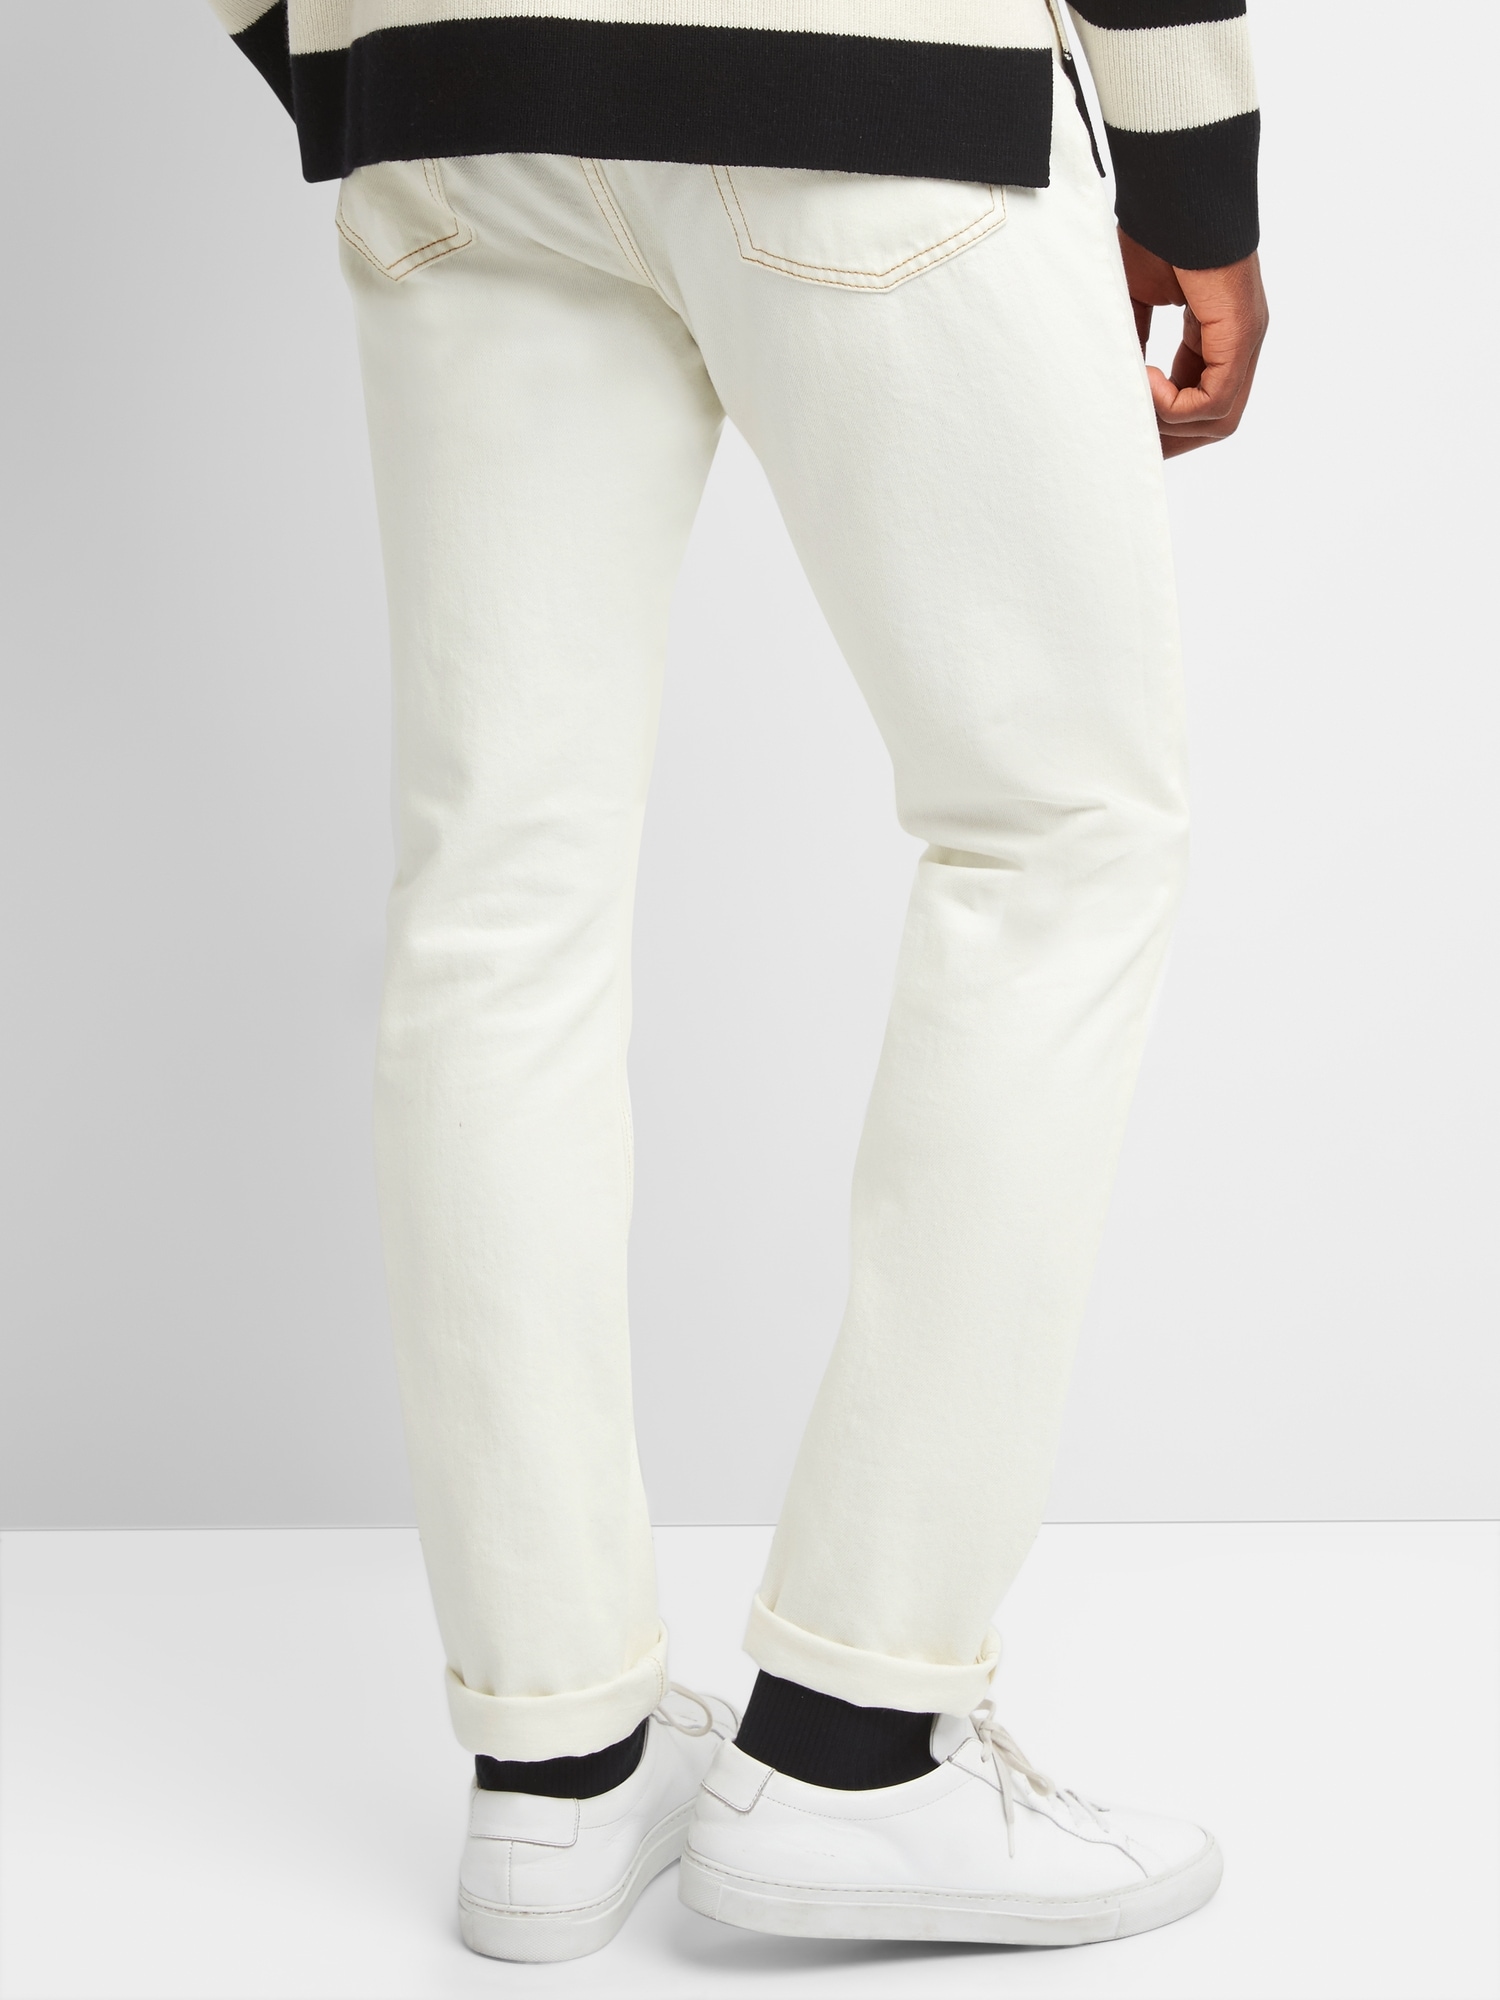 Gap + GQ Ami 5-pocket slim fit jeans | Gap